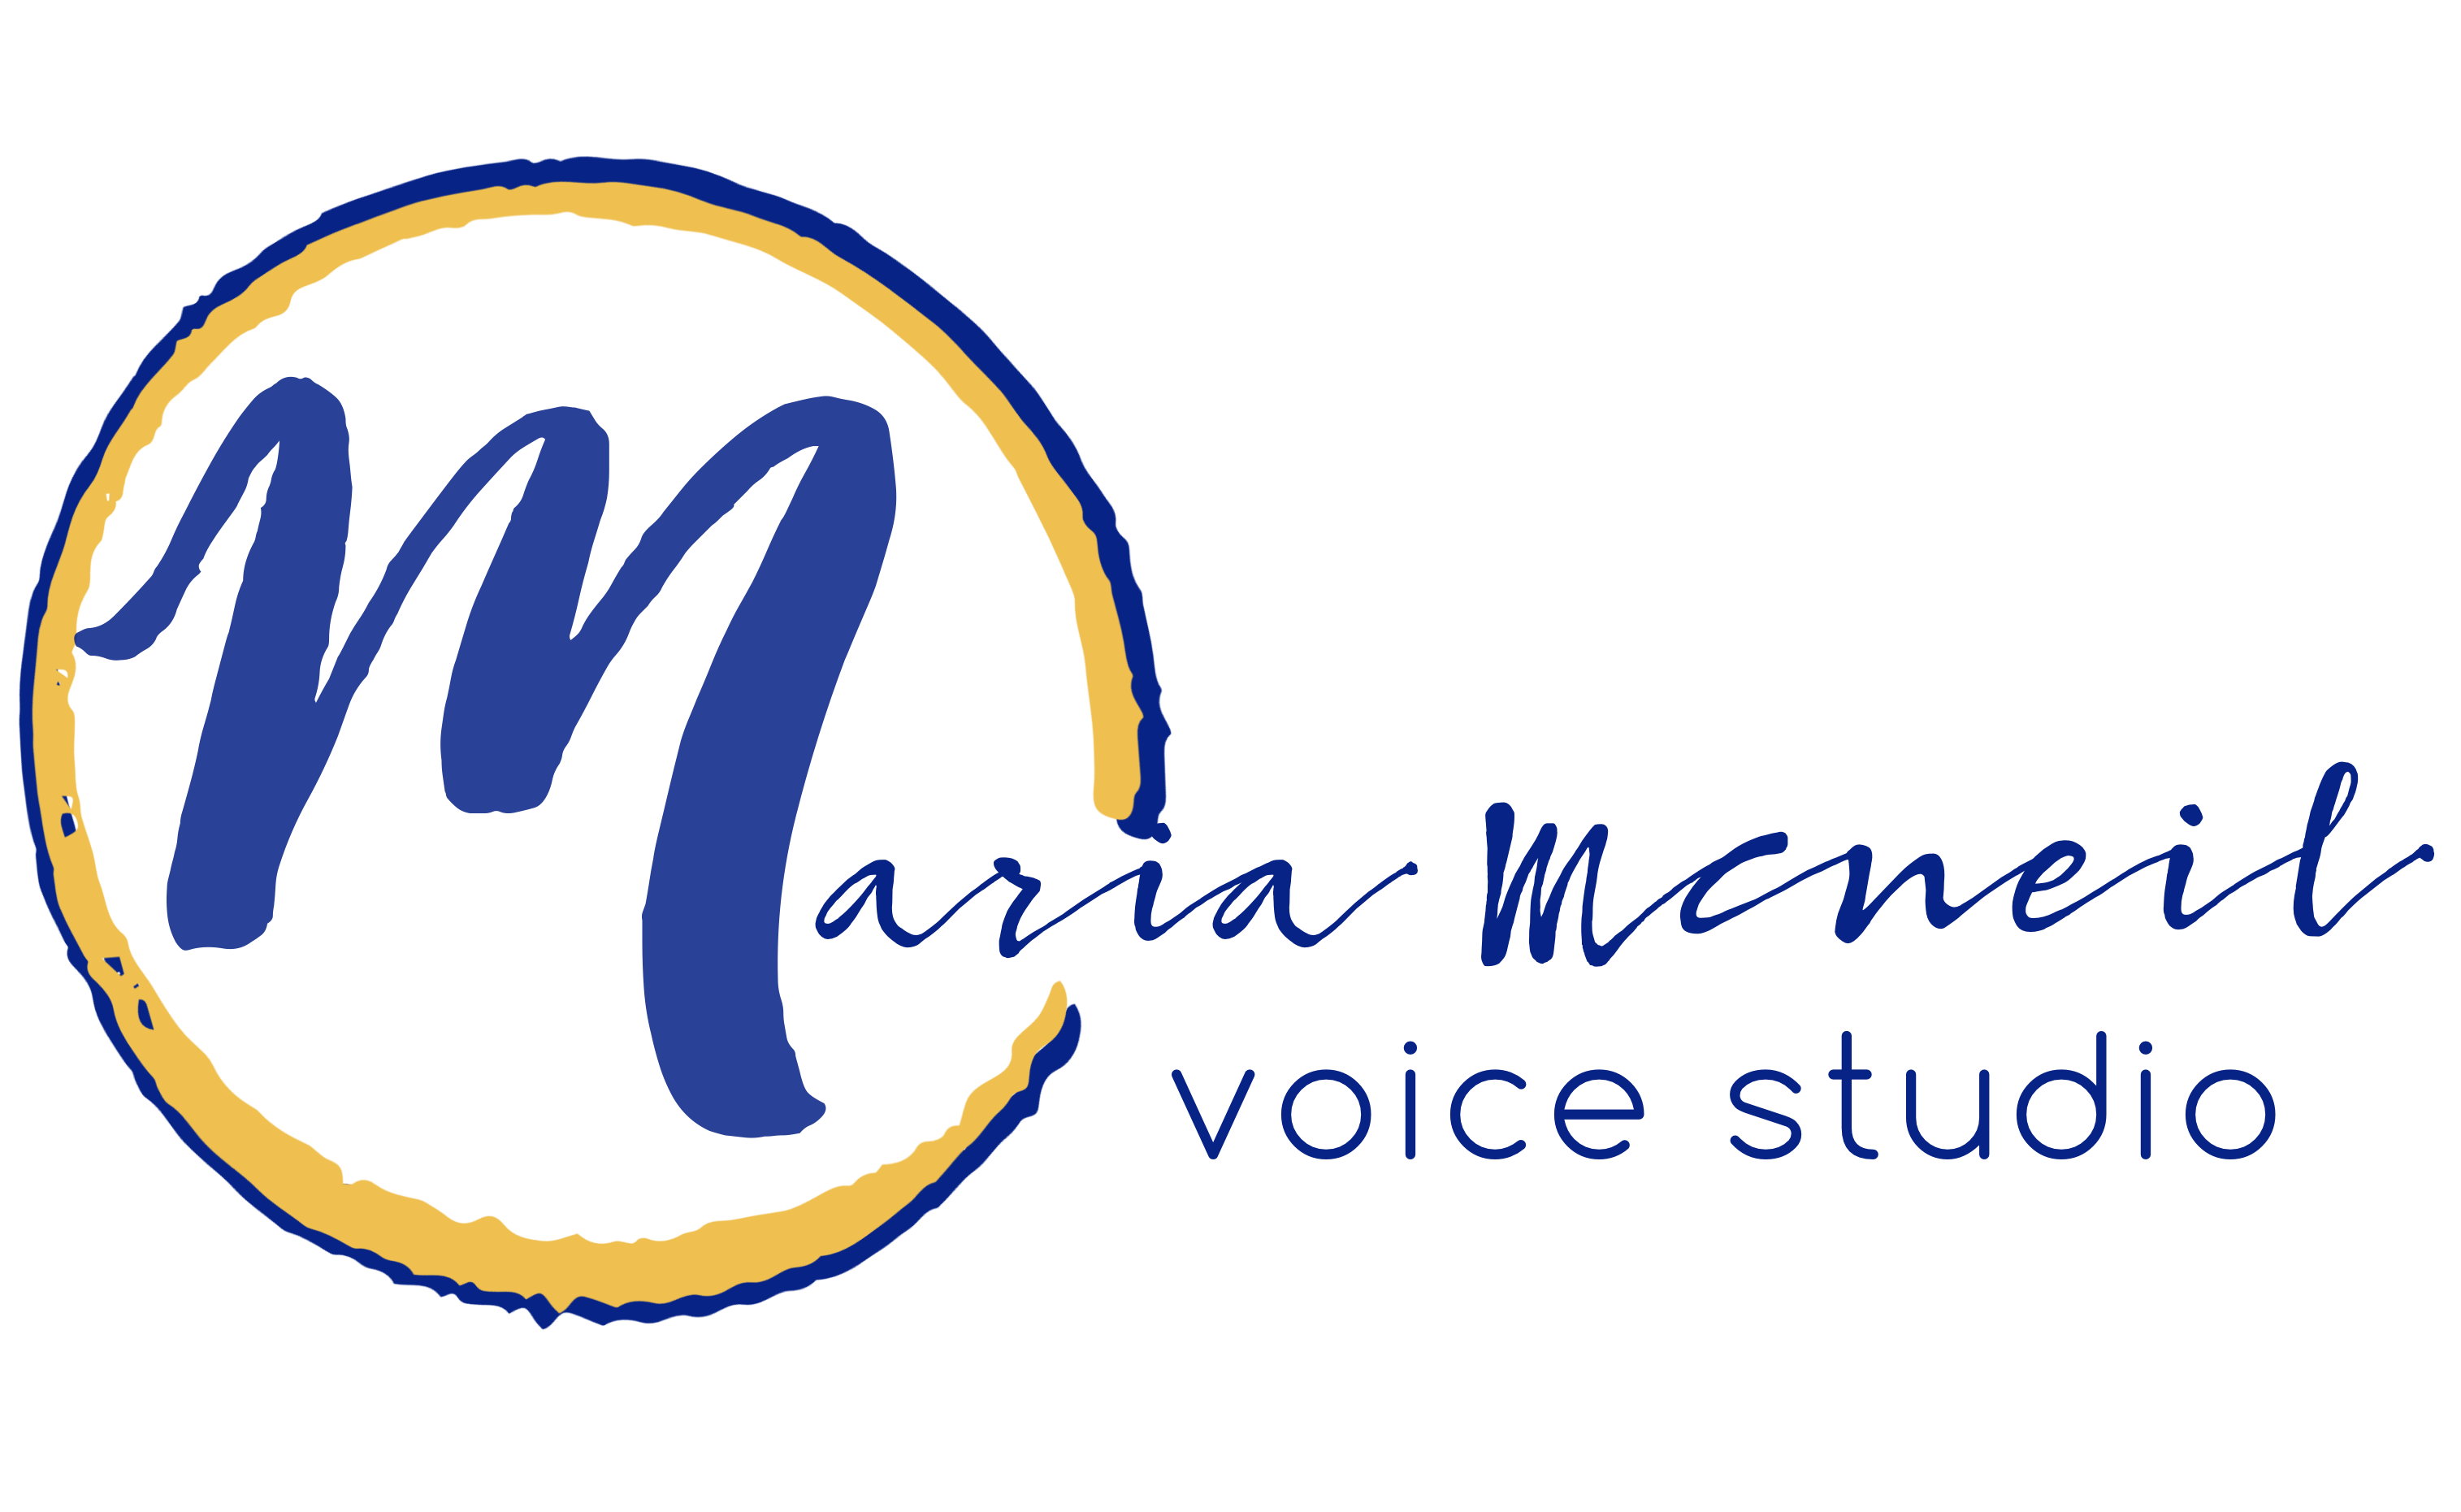 McNeil Voice Studio